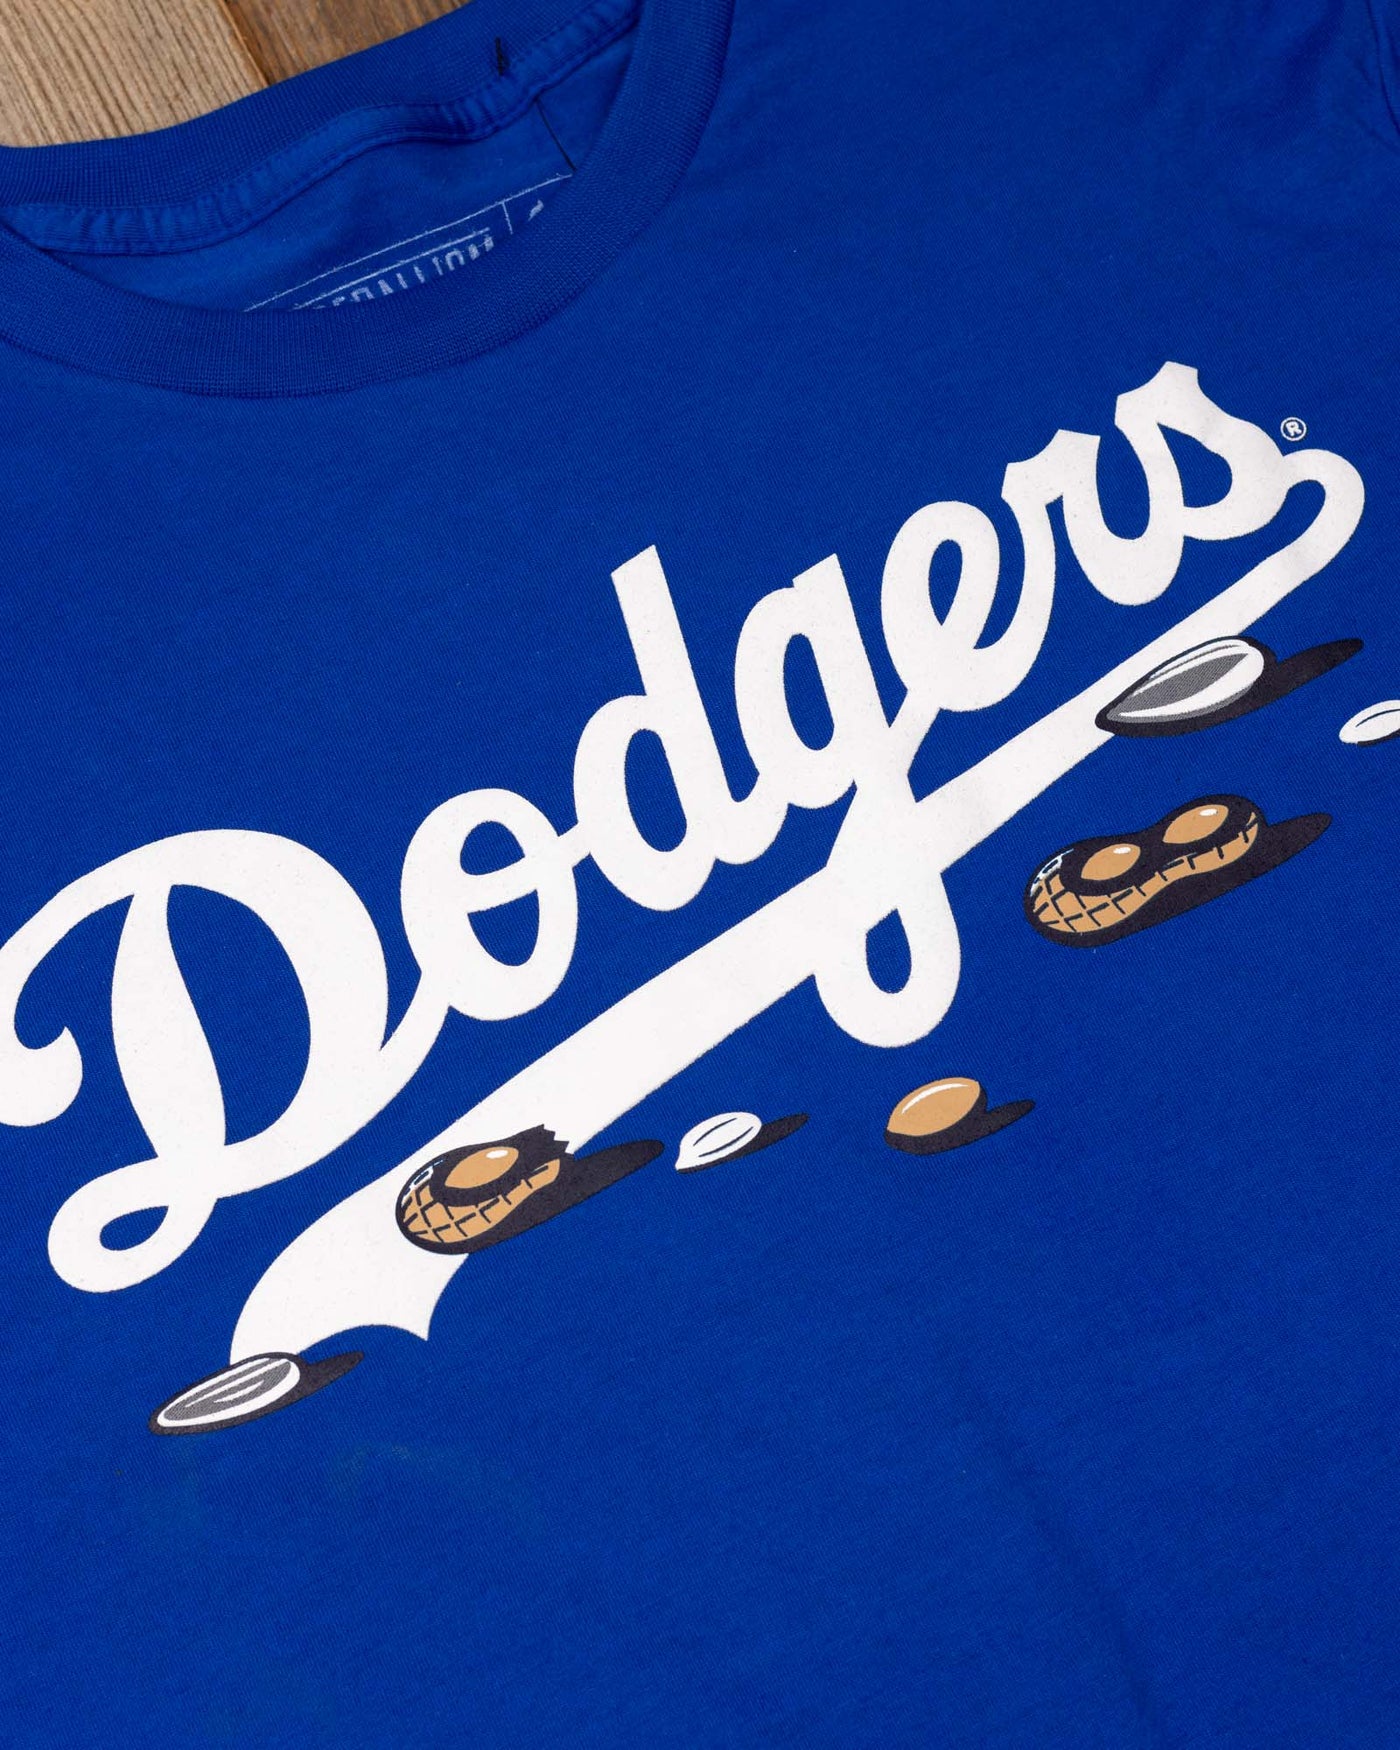 Los Angeles Dodgers Merchandise, Los Angeles Dodgers T-Shirts, Apparel